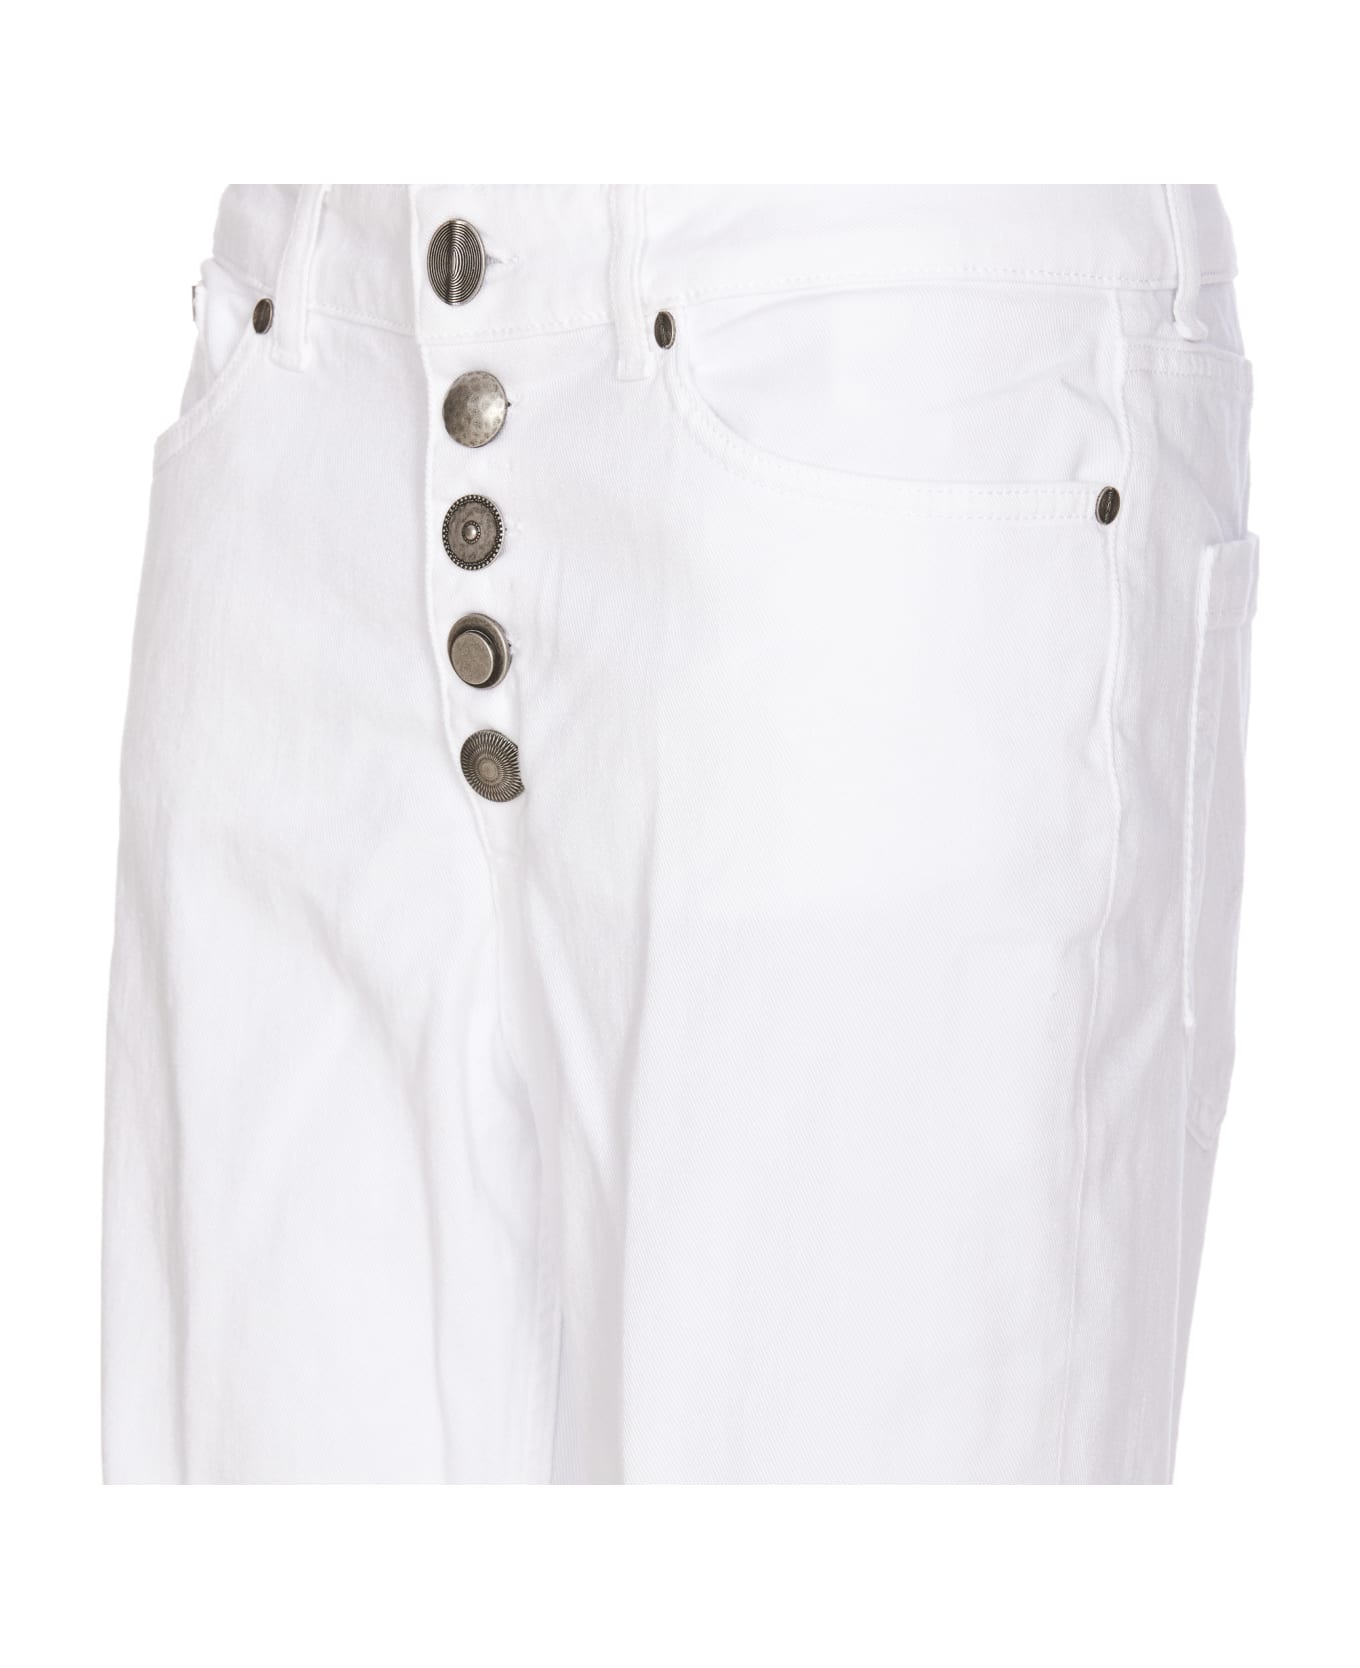 Dondup White Jeans - White